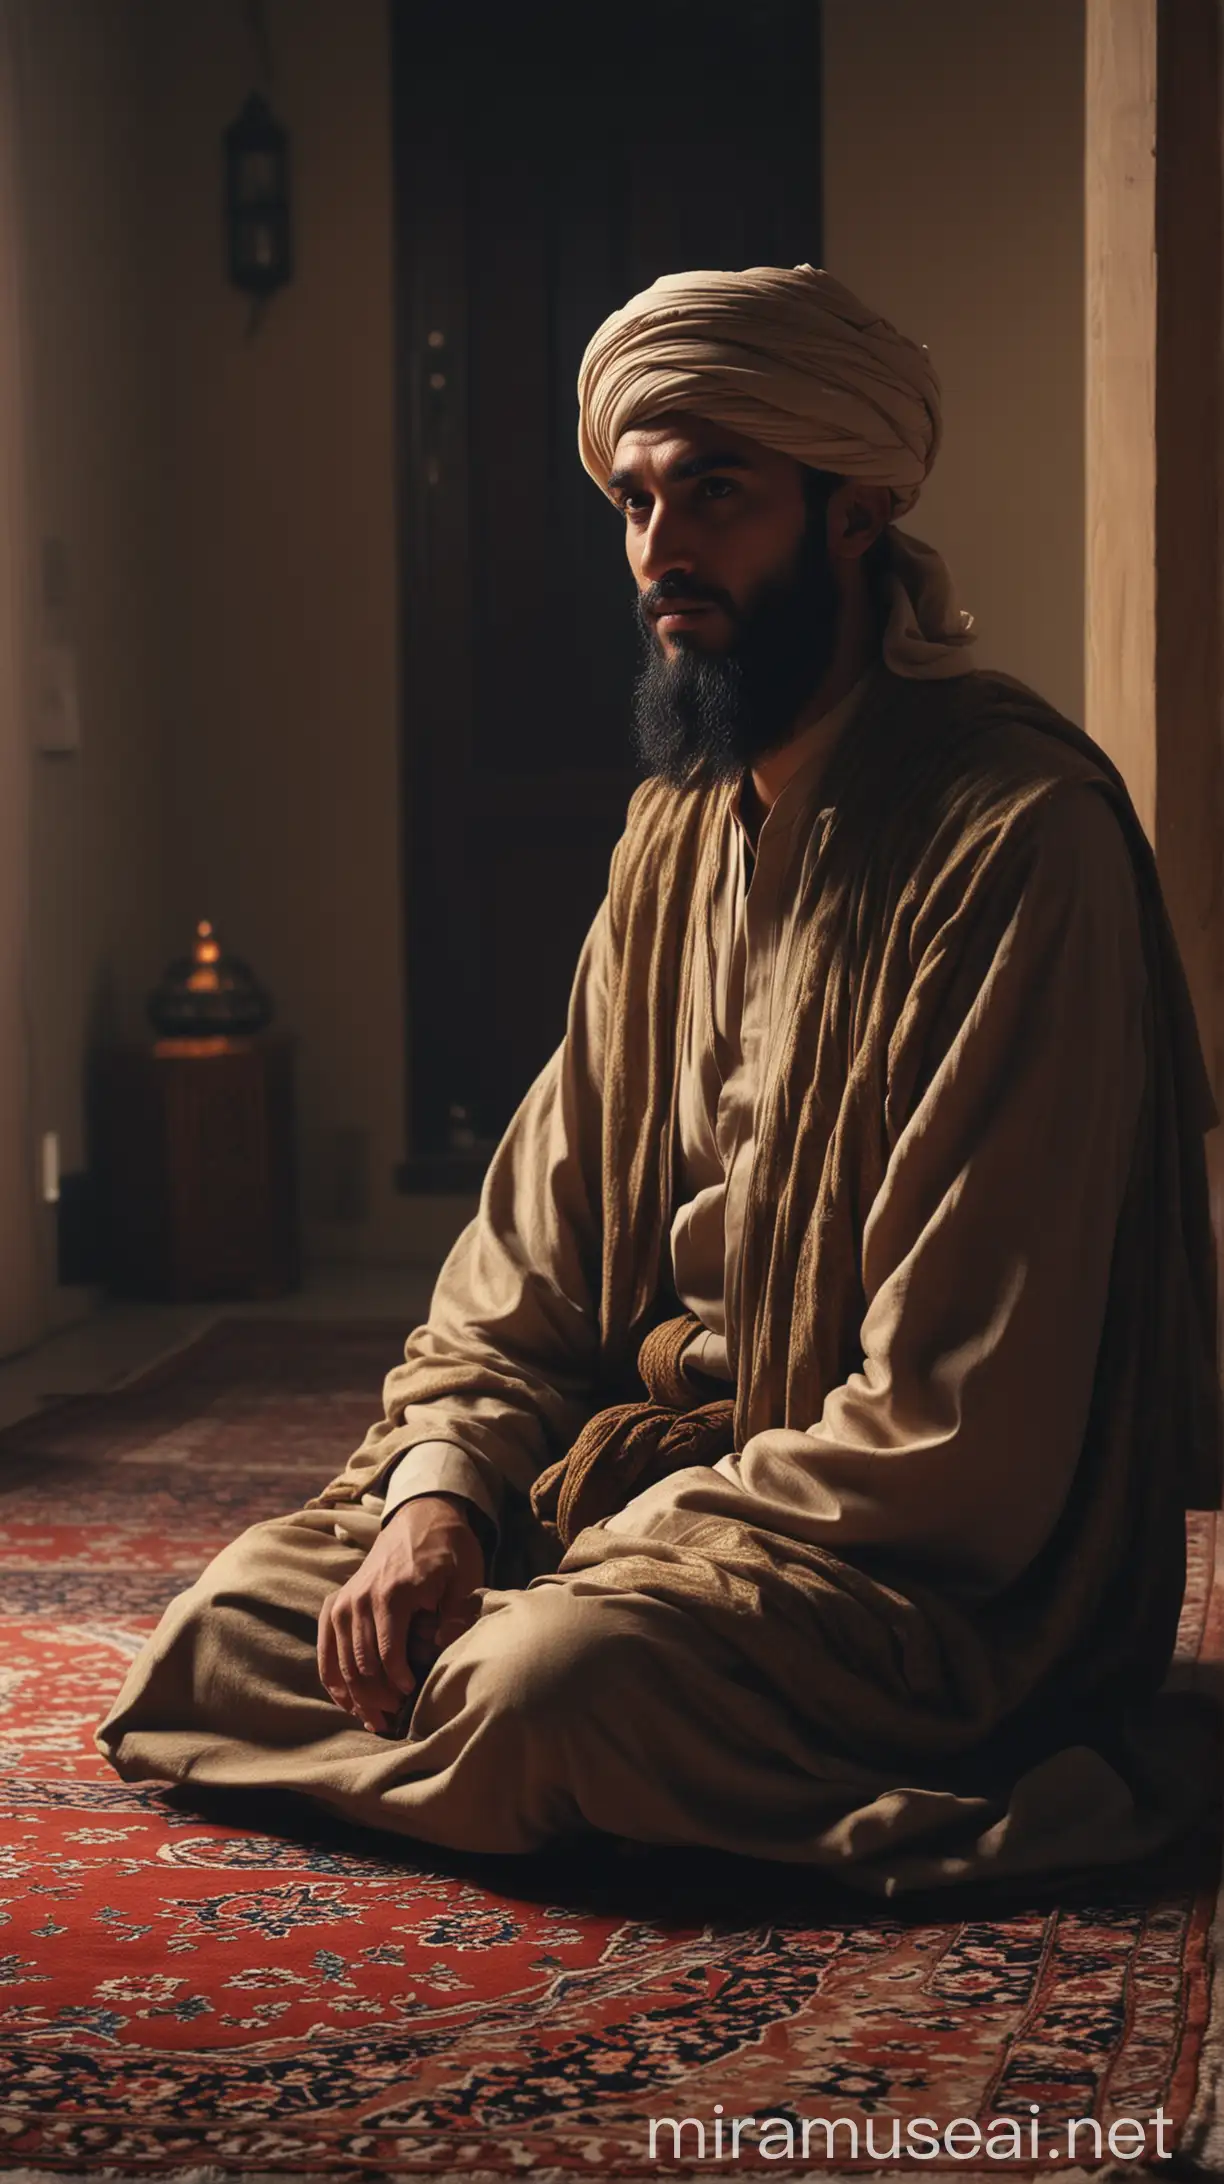 Young Ali ibn Abi Talib with Radiant Islamic Faith in HD 4K